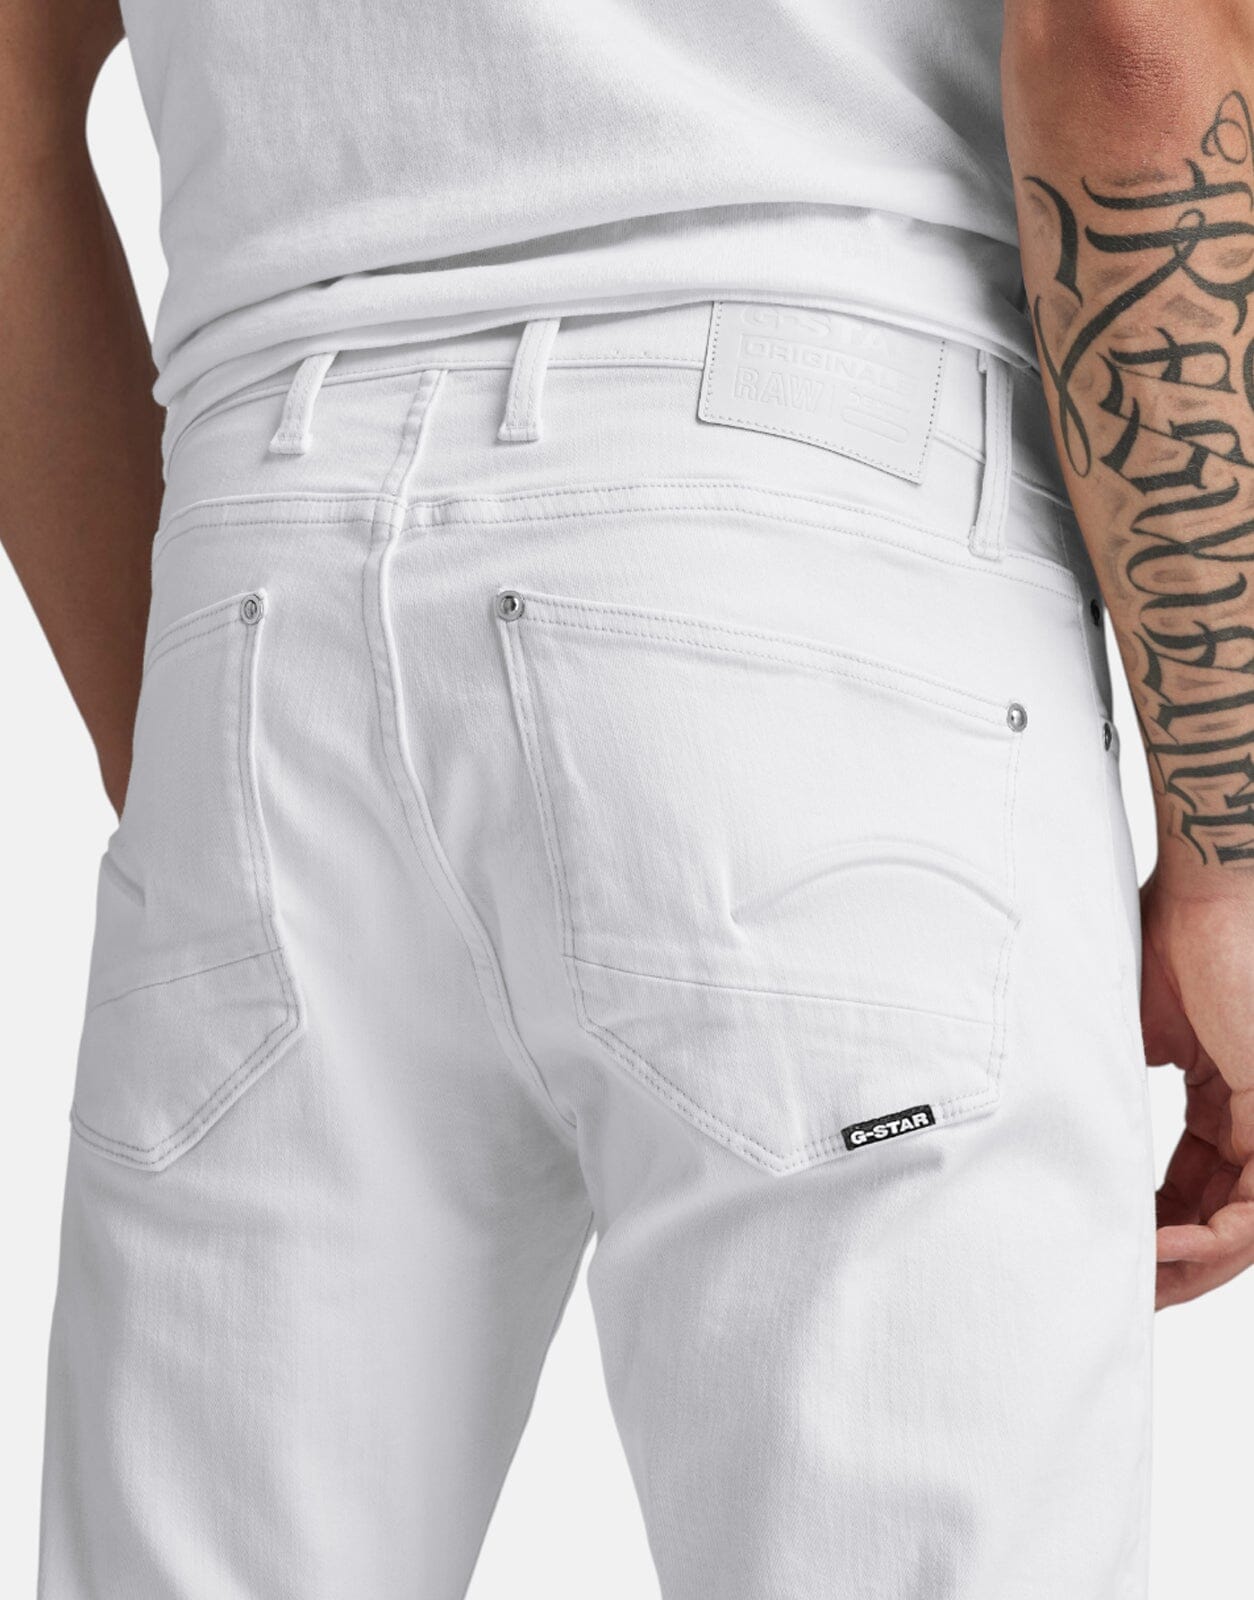 G-Star RAW Revend FWD Skinny Paper White - Subwear